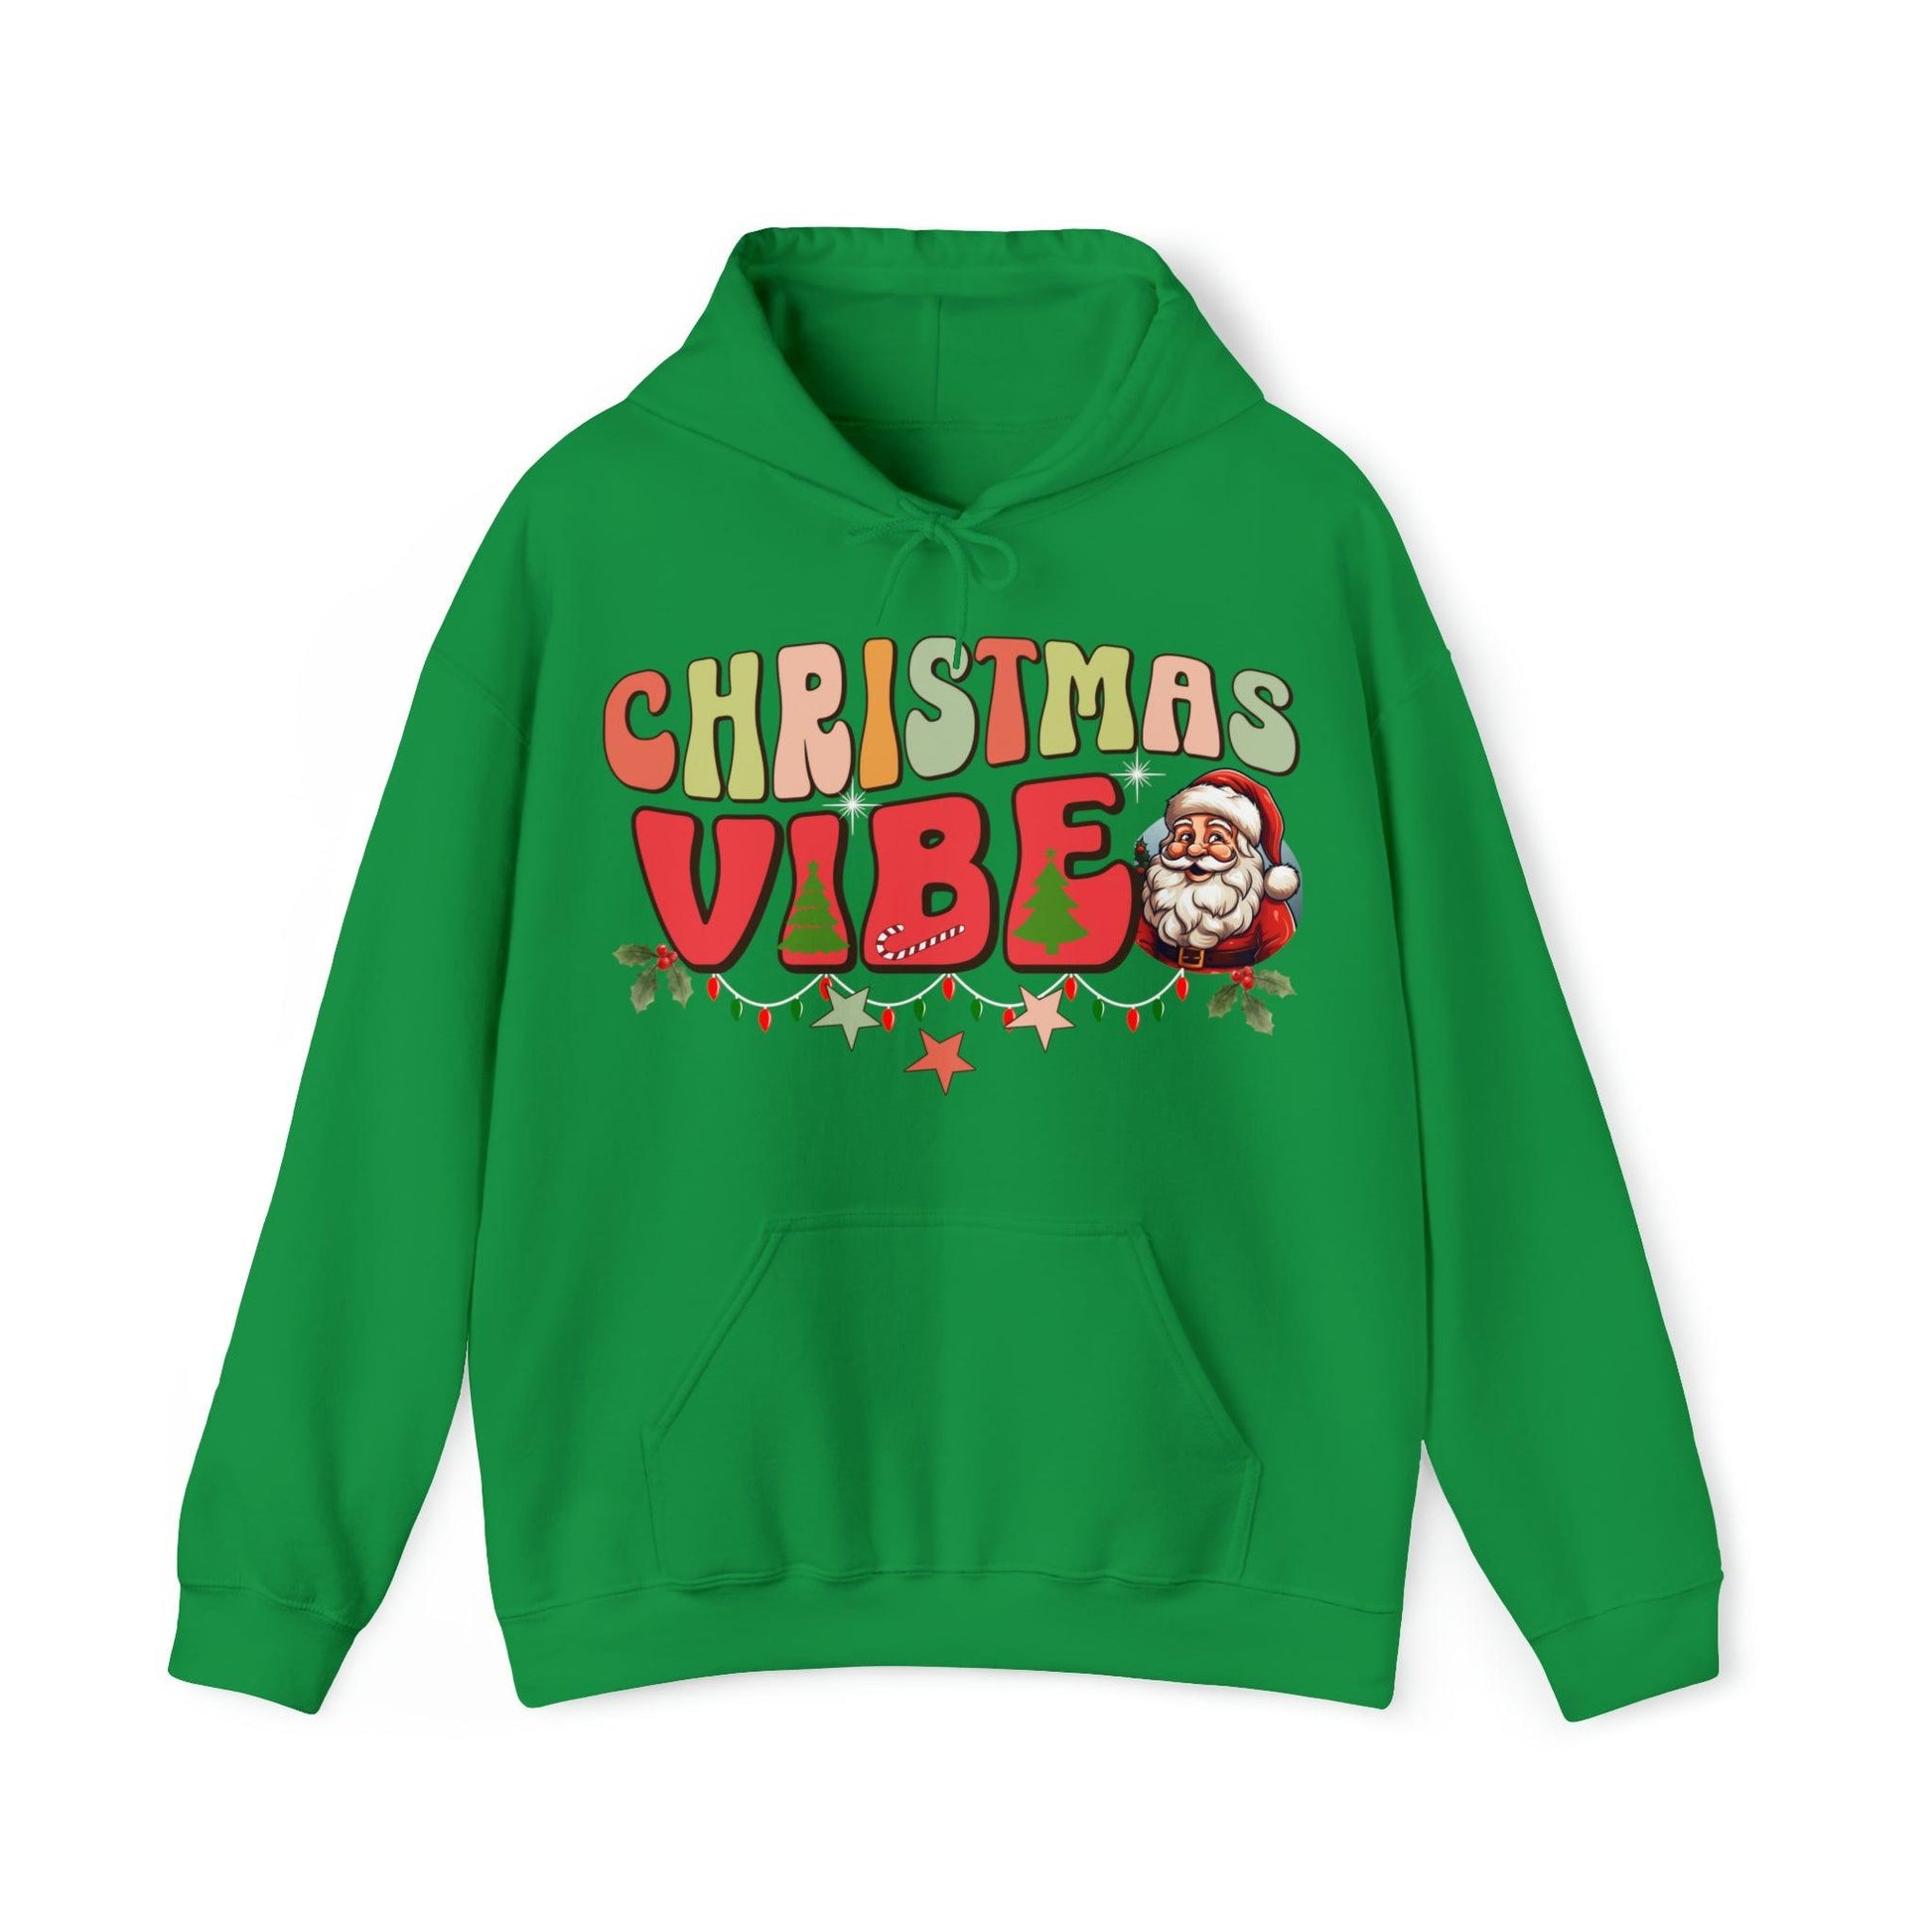 Cute Christmas Vibes Hooded Sweatshirt